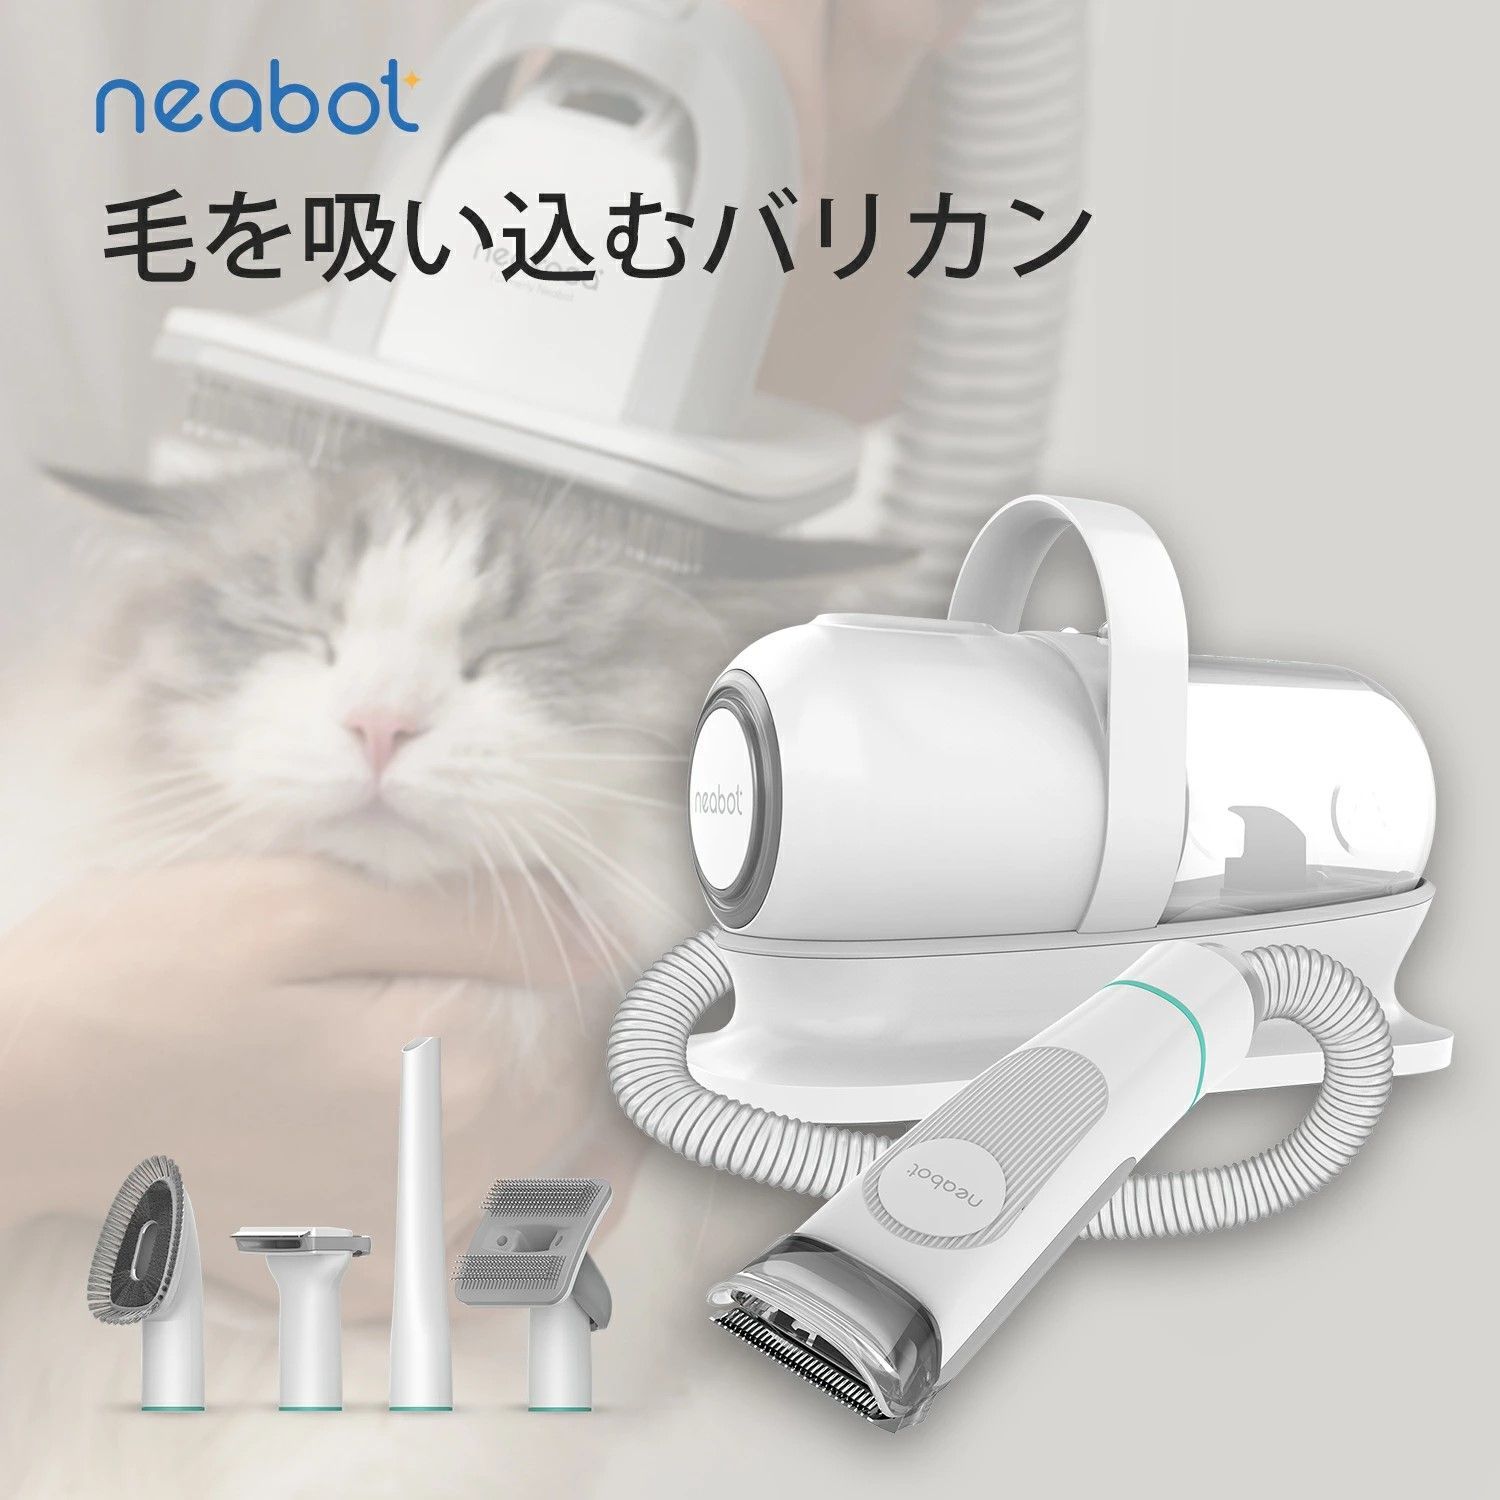 Neabot ペット用バリカン ペットグルーミング クリーナー - 三山企画